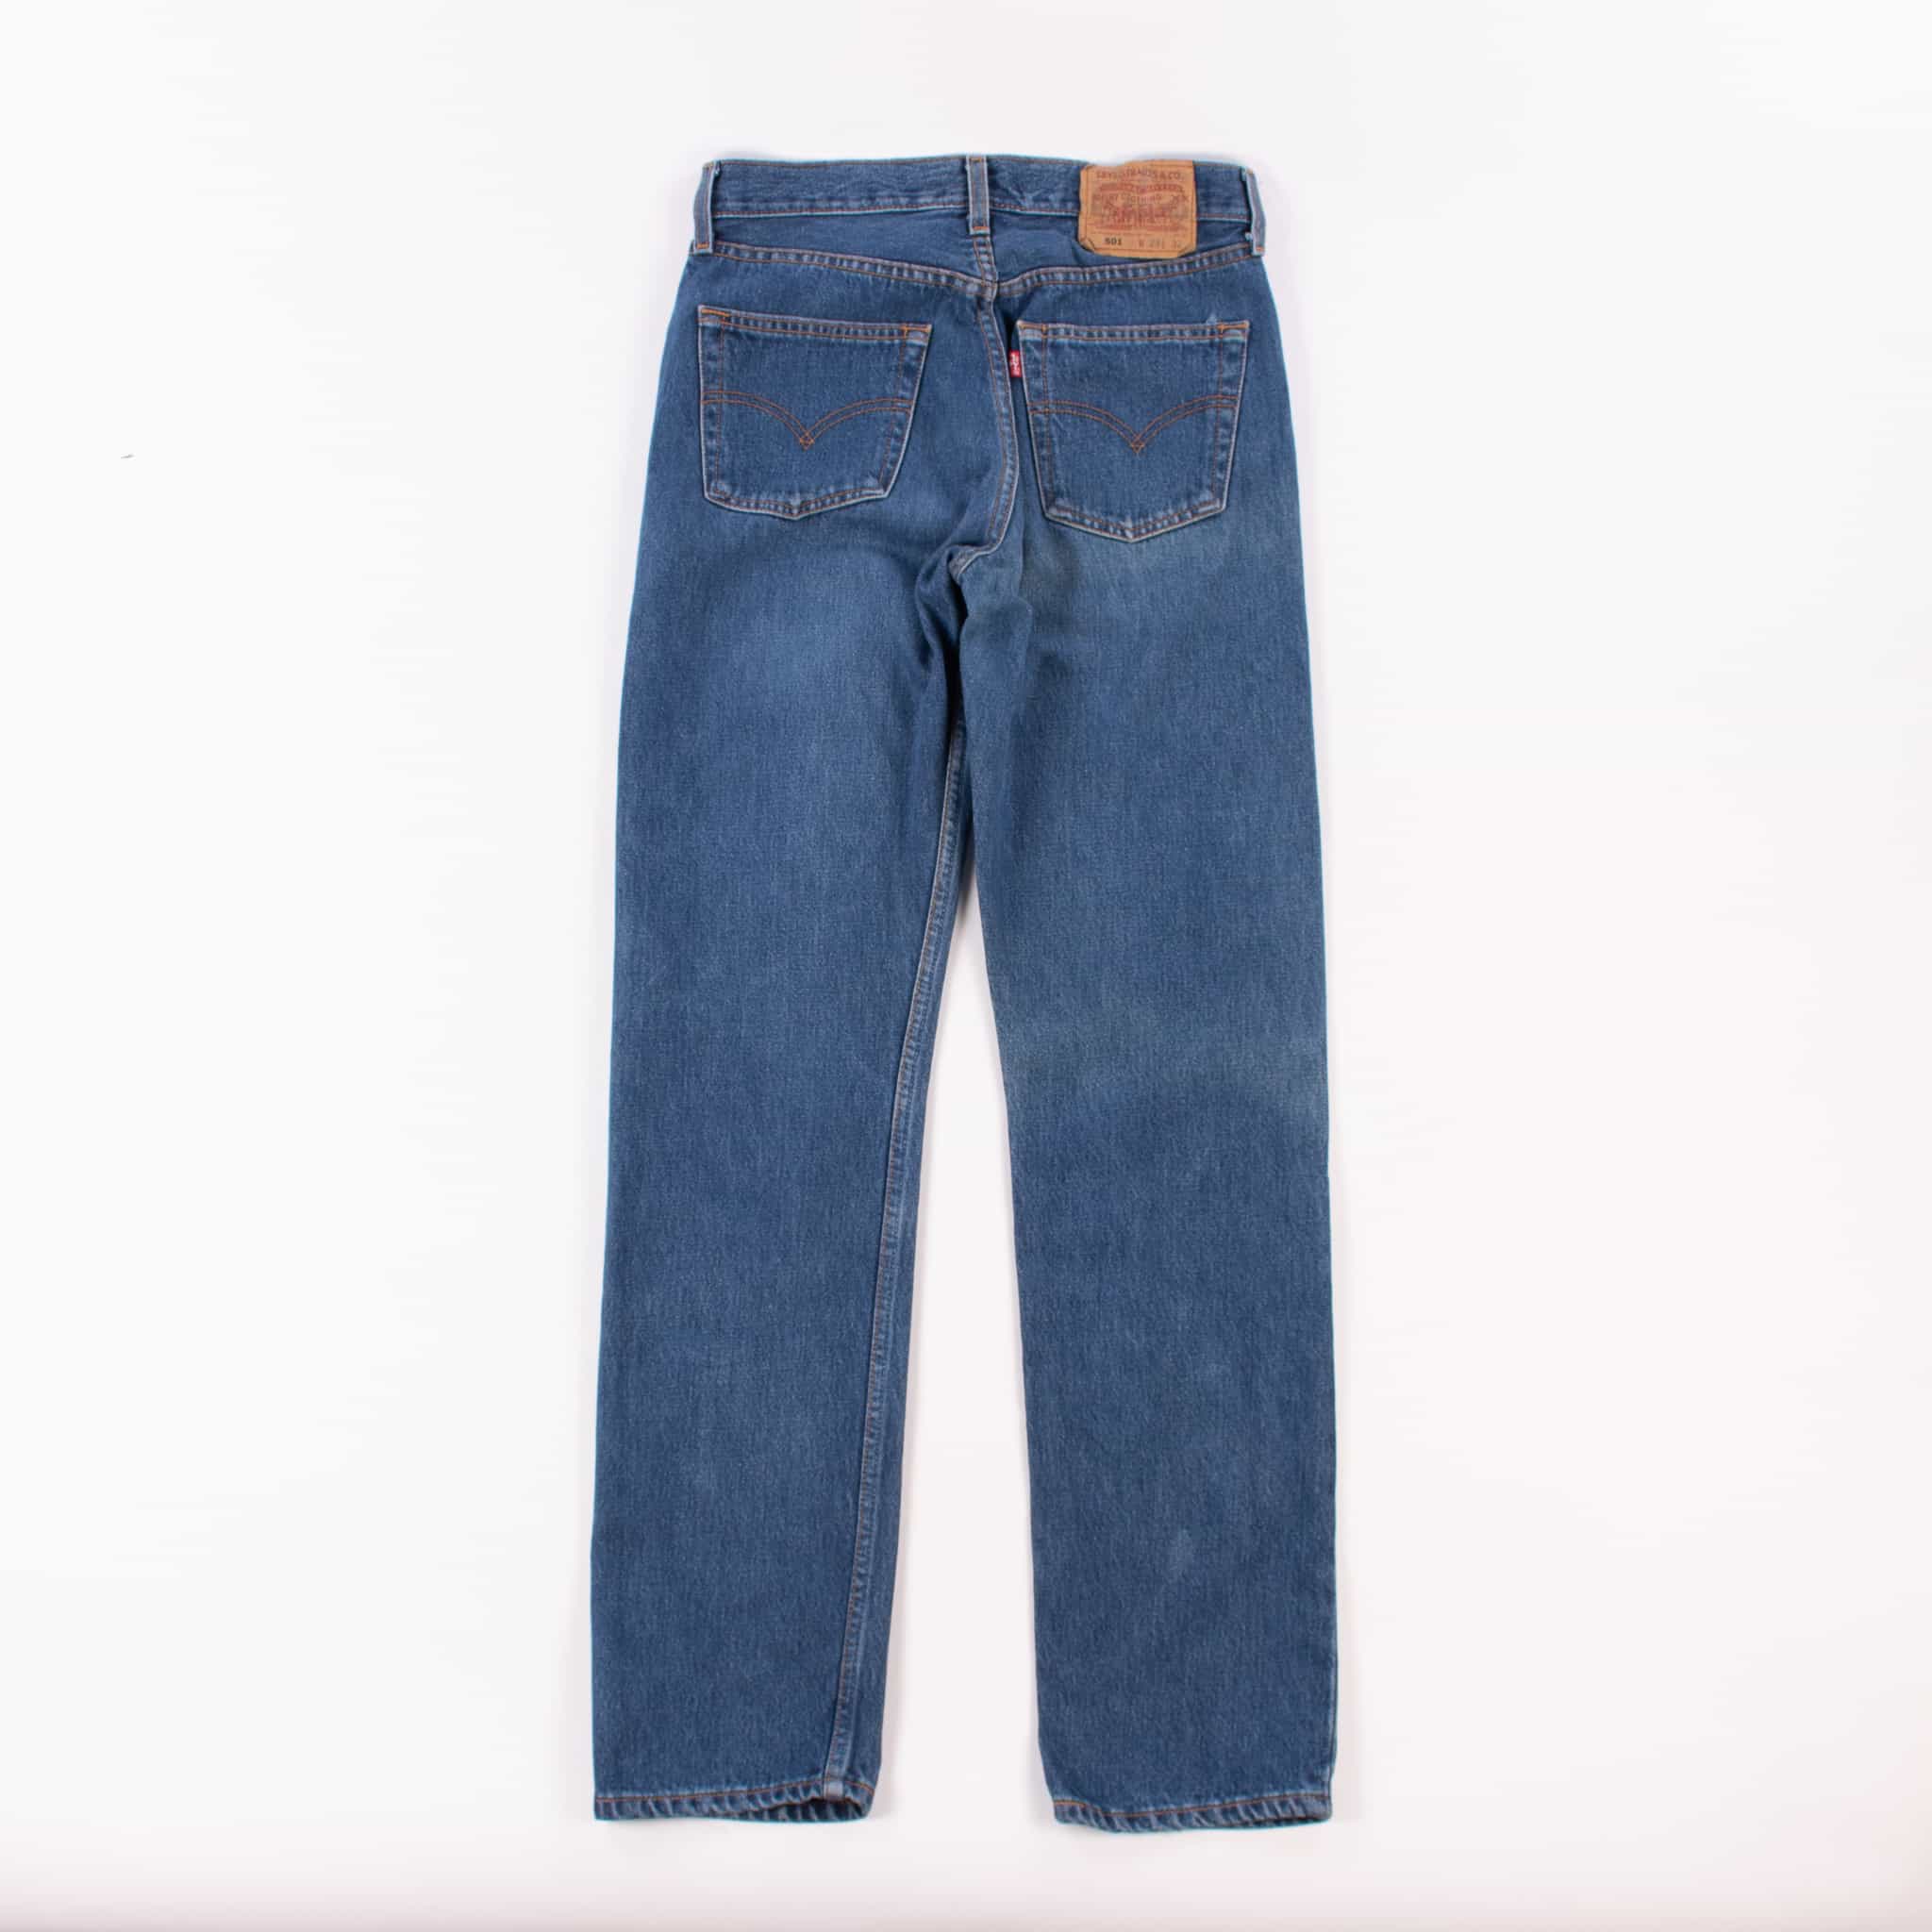 Vintage Levi's 501 Jeans - Denim Light Wash